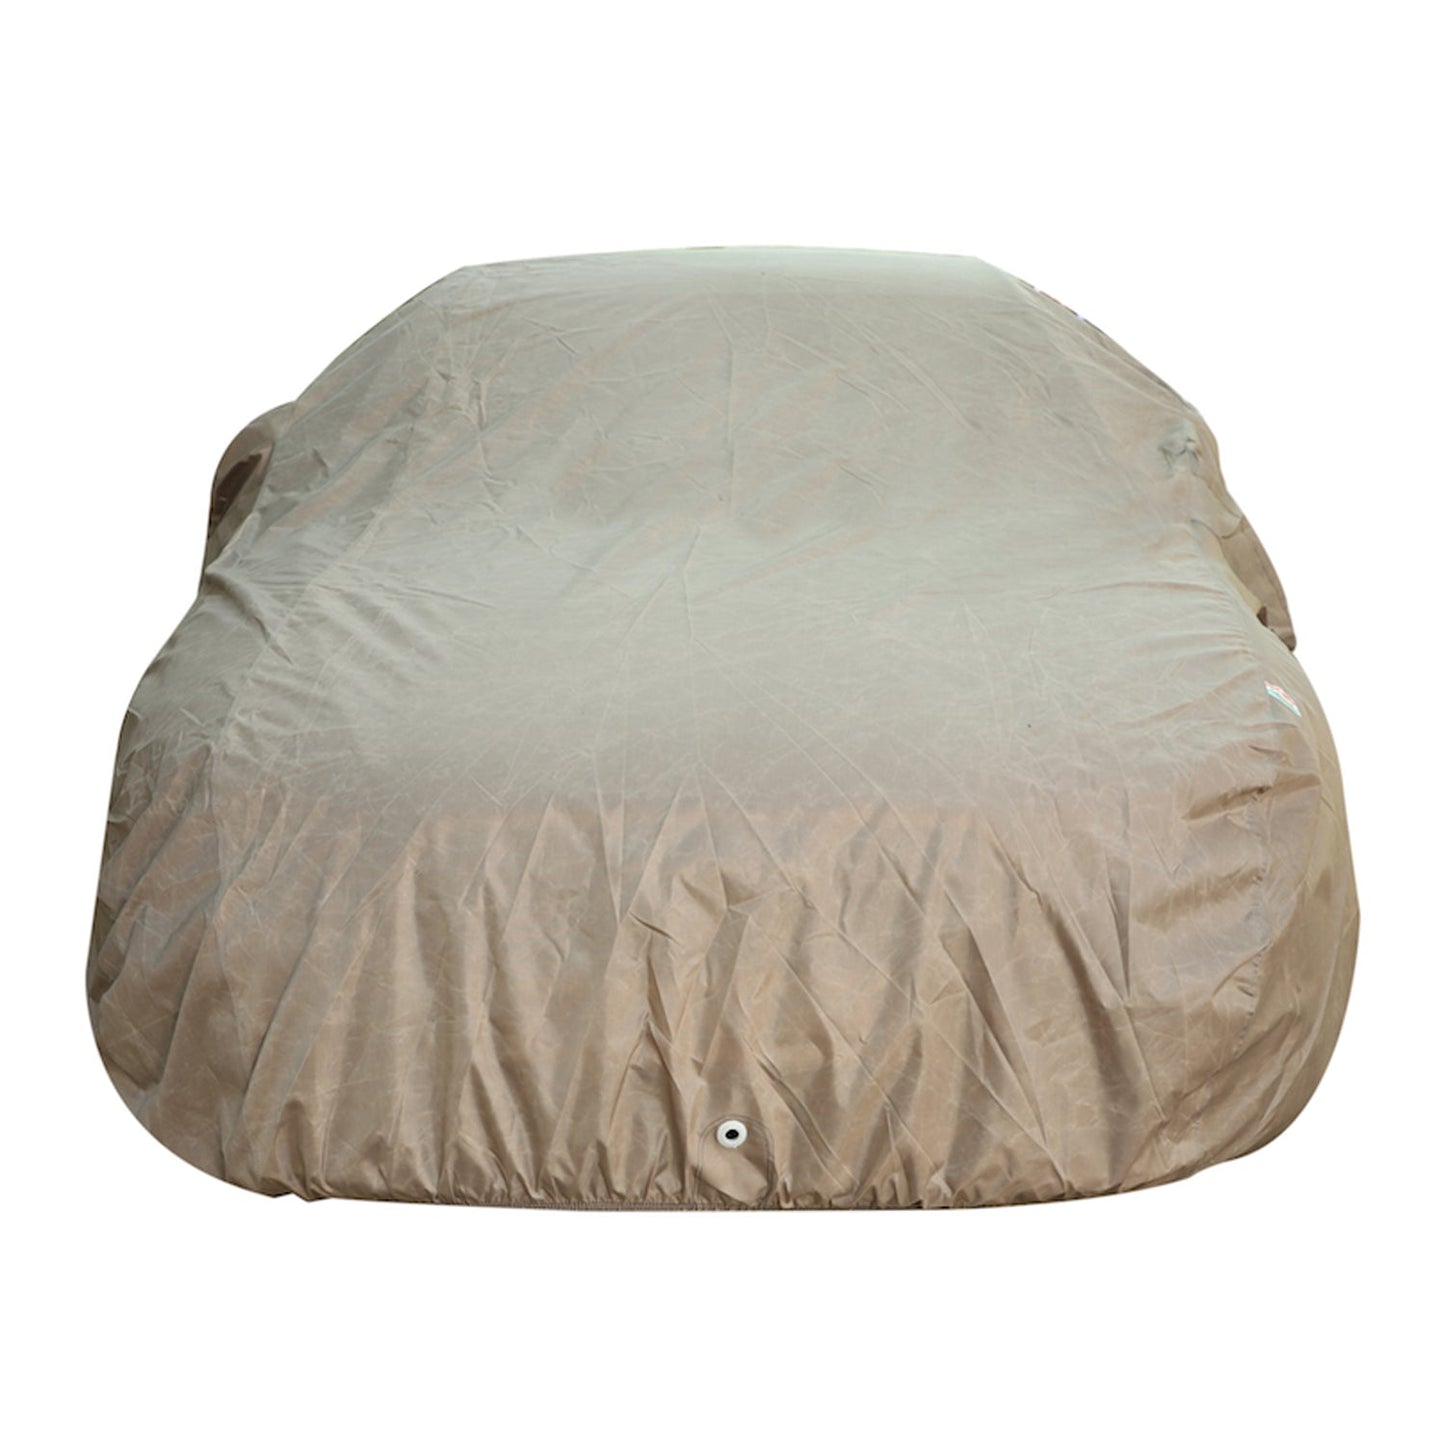 Oshotto Brown 100% Waterproof Car Body Cover with Mirror Pockets For Maruti Suzuki Ritz